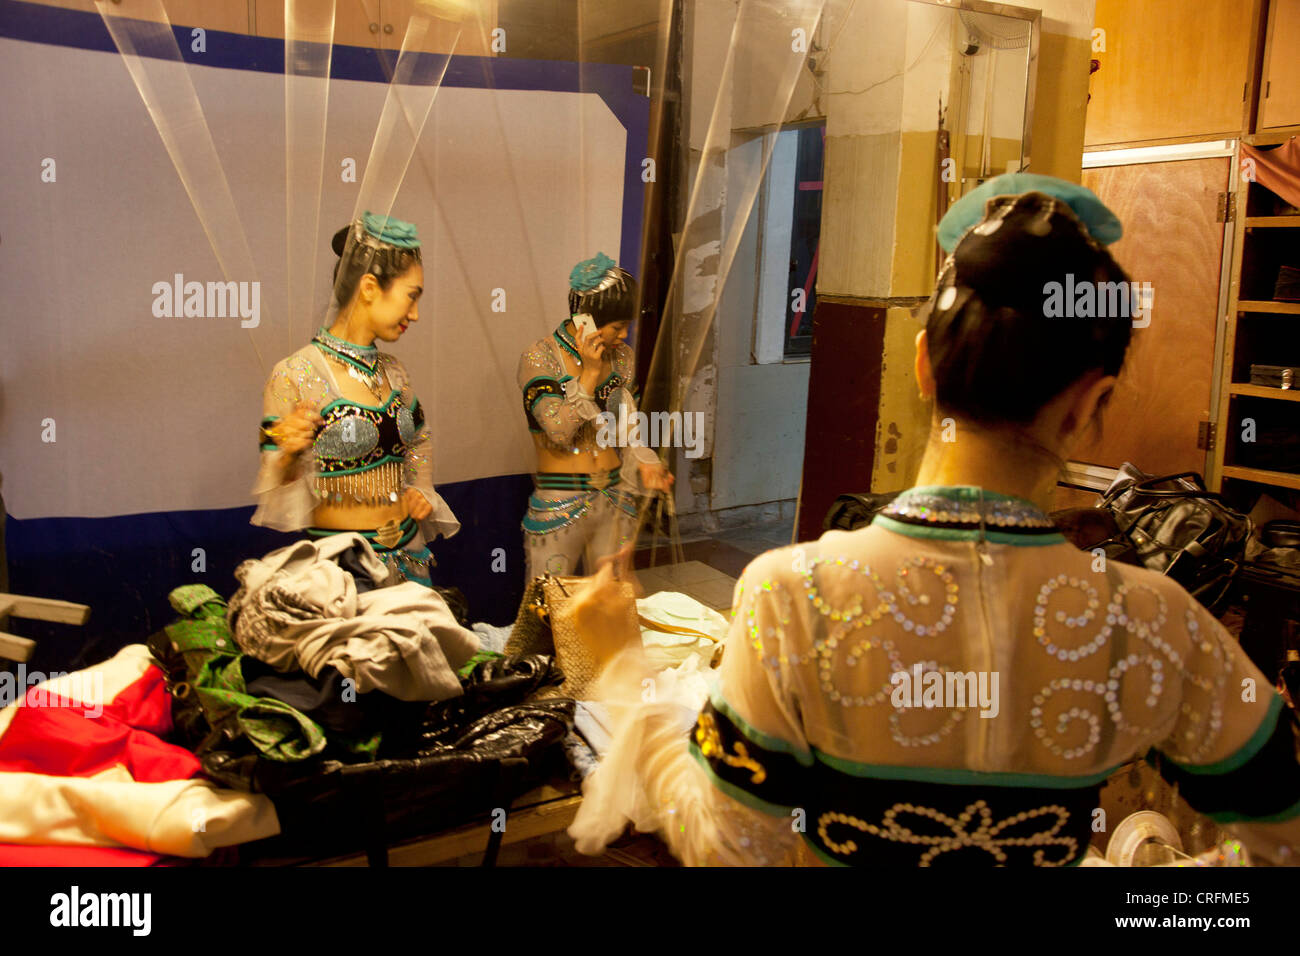 Künstler hinter der Bühne am Laoshe Teehaus auf Qianmenxi Dajie Straße, Xuanwu District, Beijing, China. Stockfoto